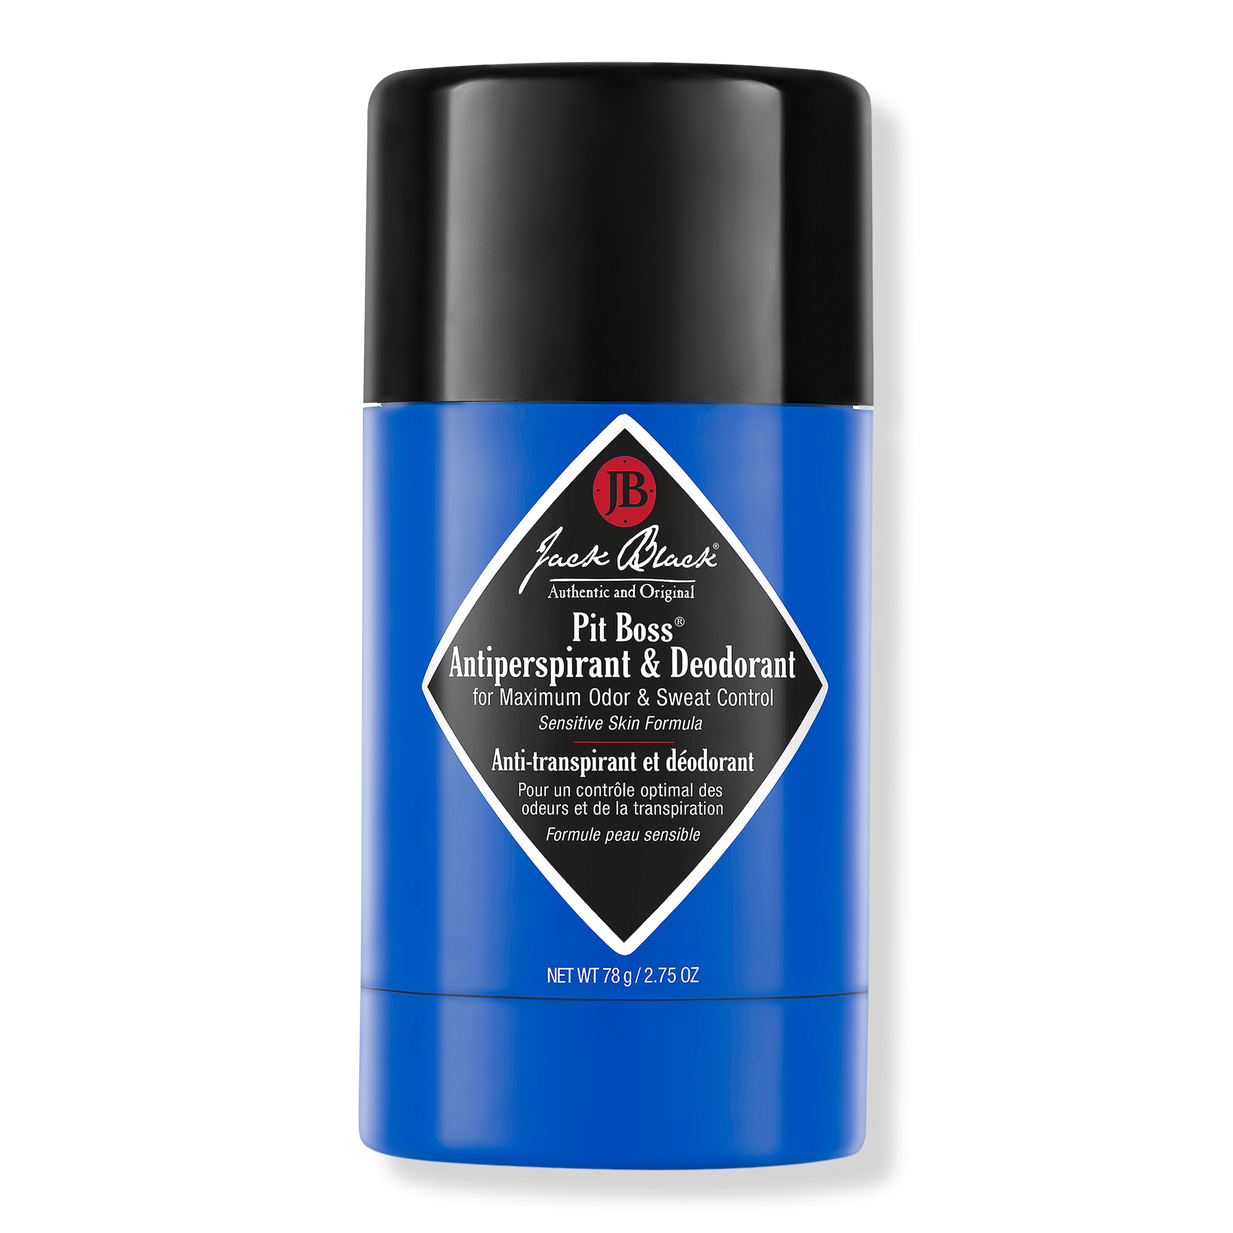 Jack Black Pit Boss Antiperspirant & Deodorant - 2.75 oz